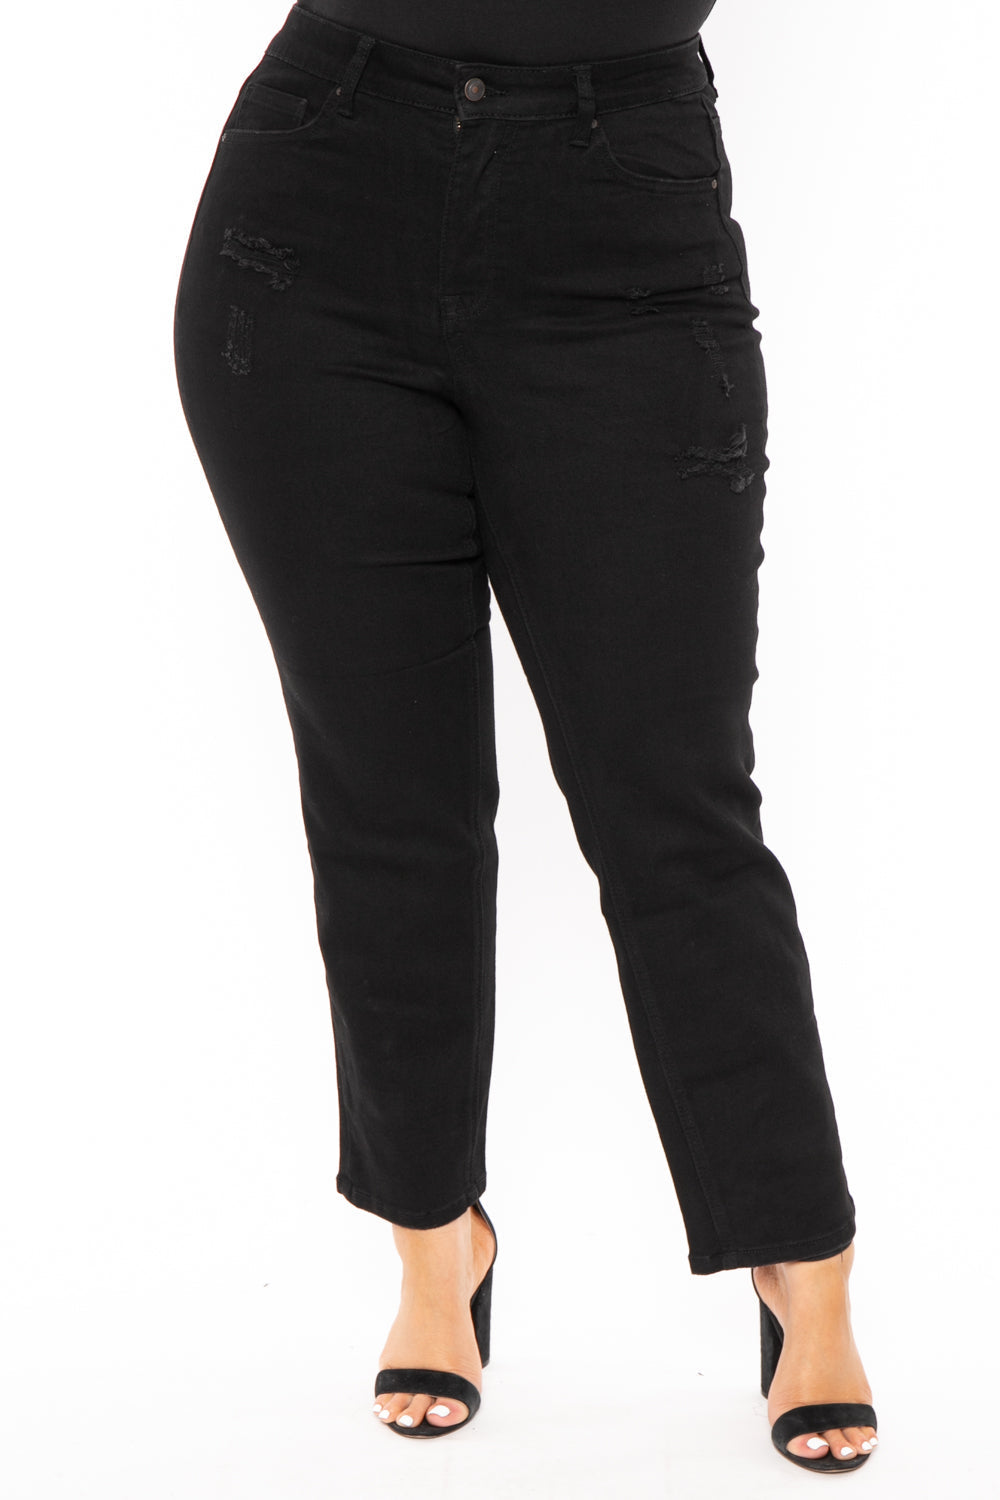 Wax Jean Jeans 14 / Black Plus Size Authentic Wash Slim Straight Jean - Black